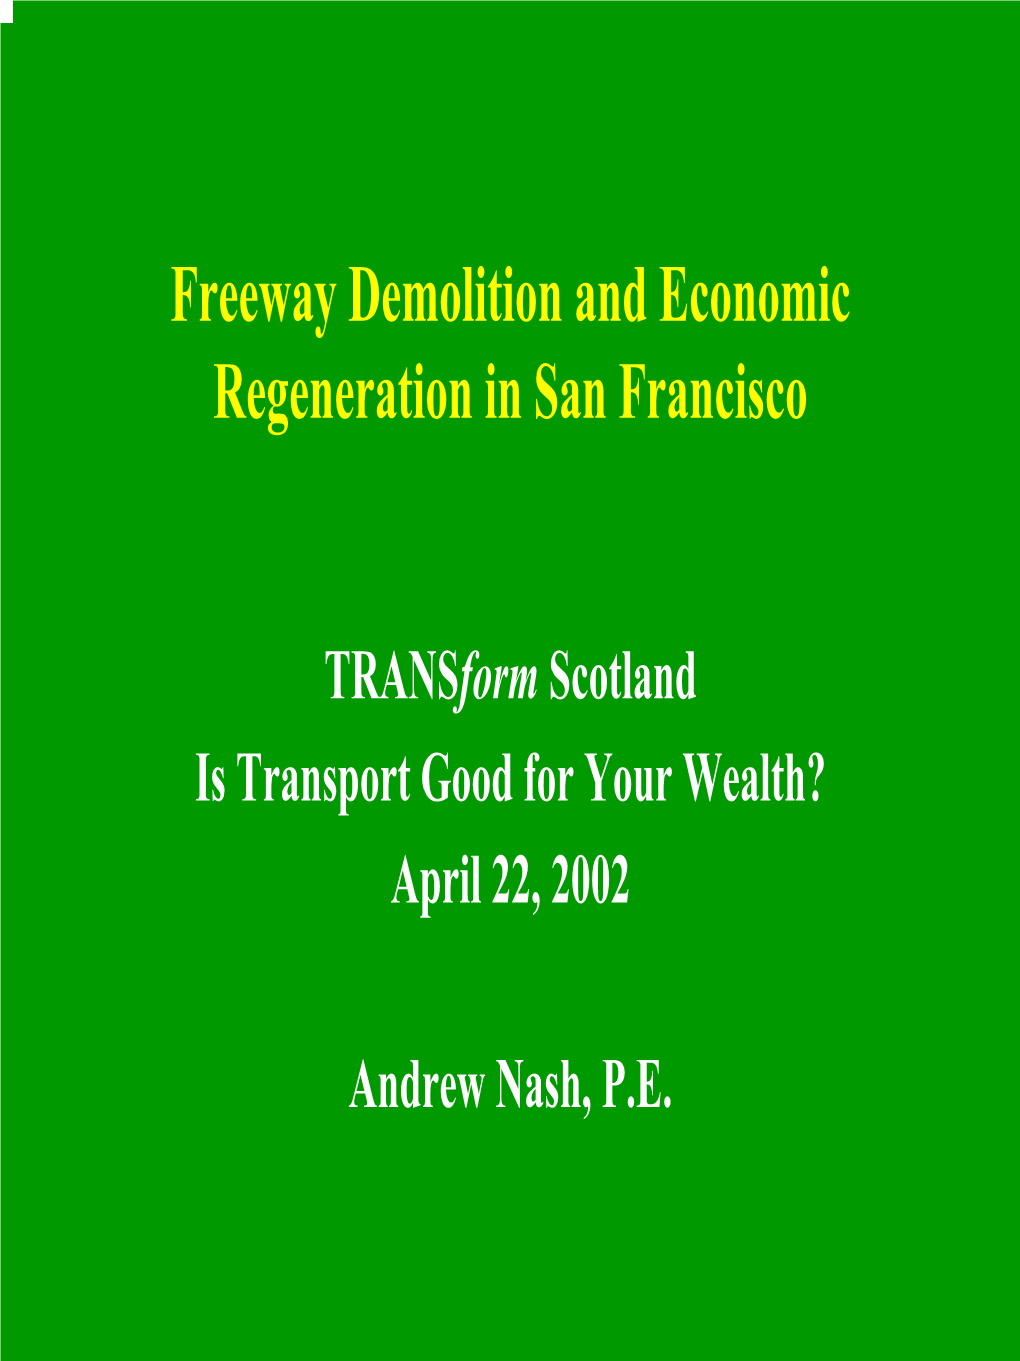 Economic Impacts of San Francisco's Freeway Demolition